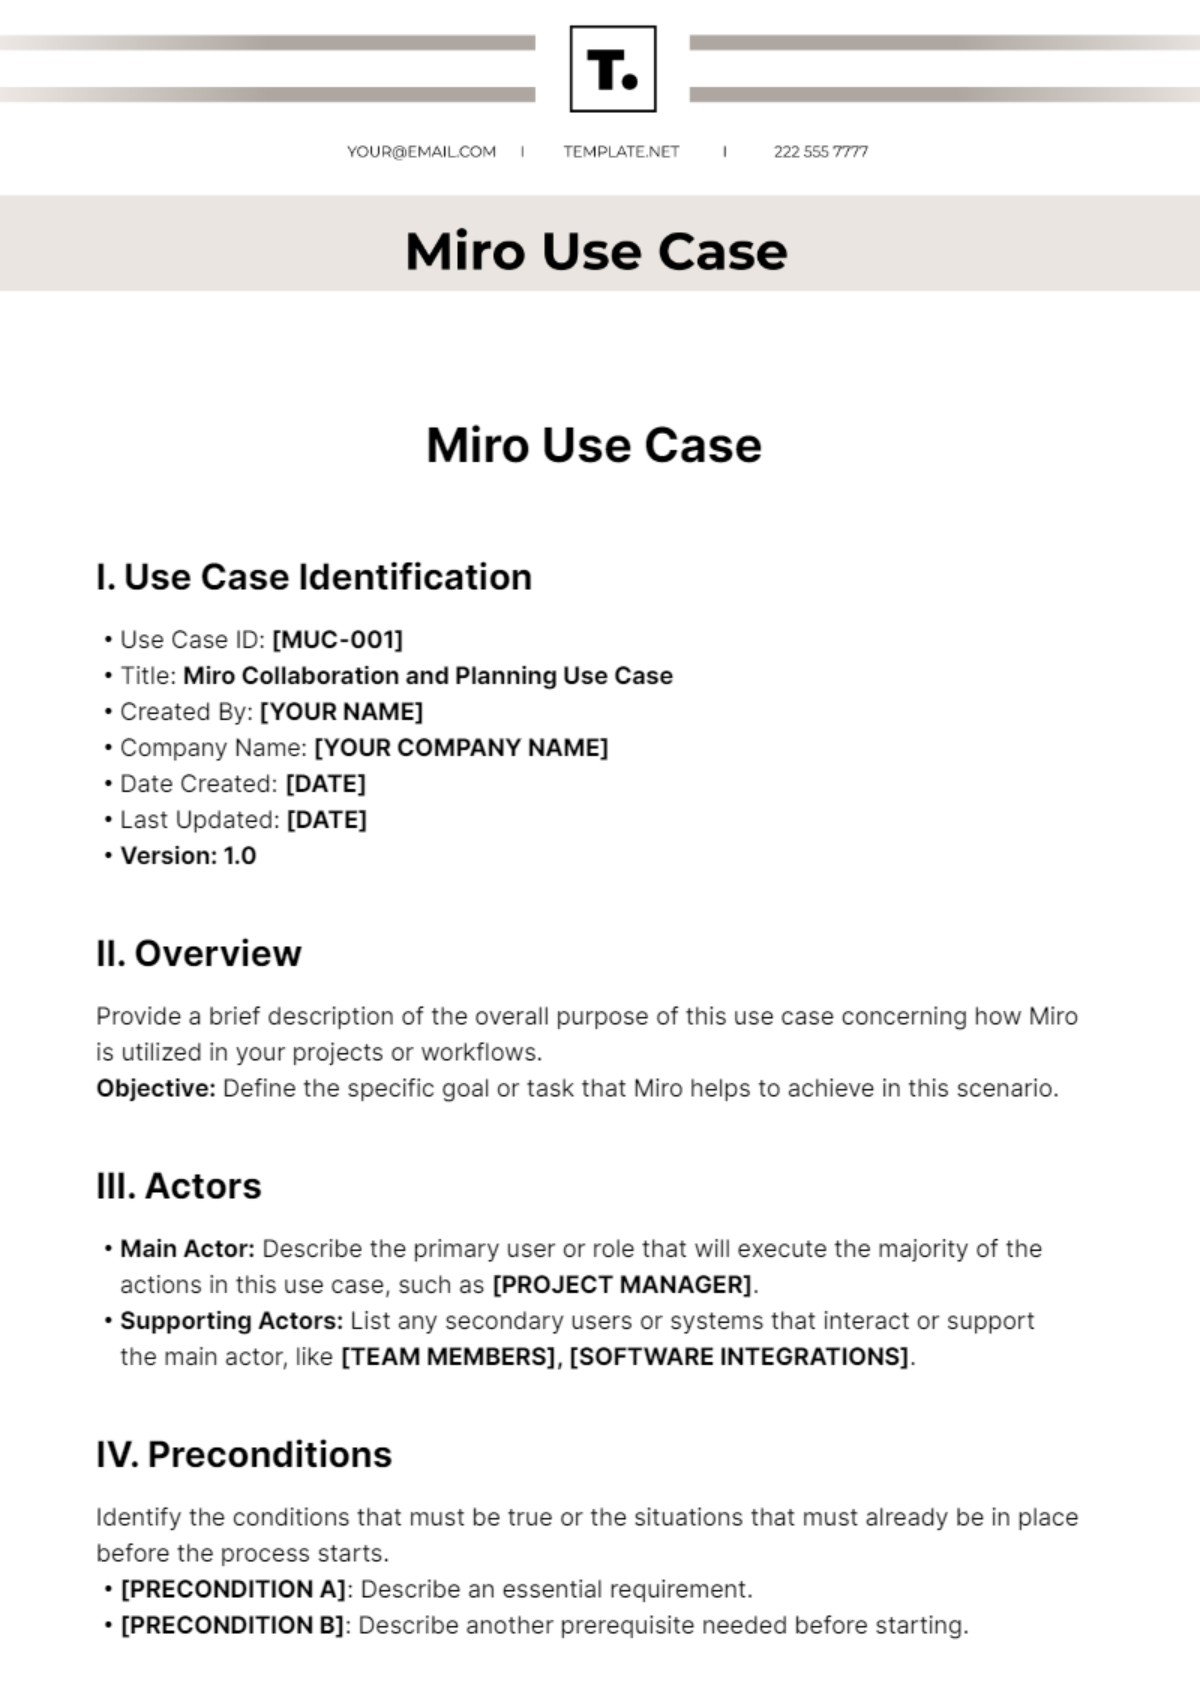 Miro Use Case Template